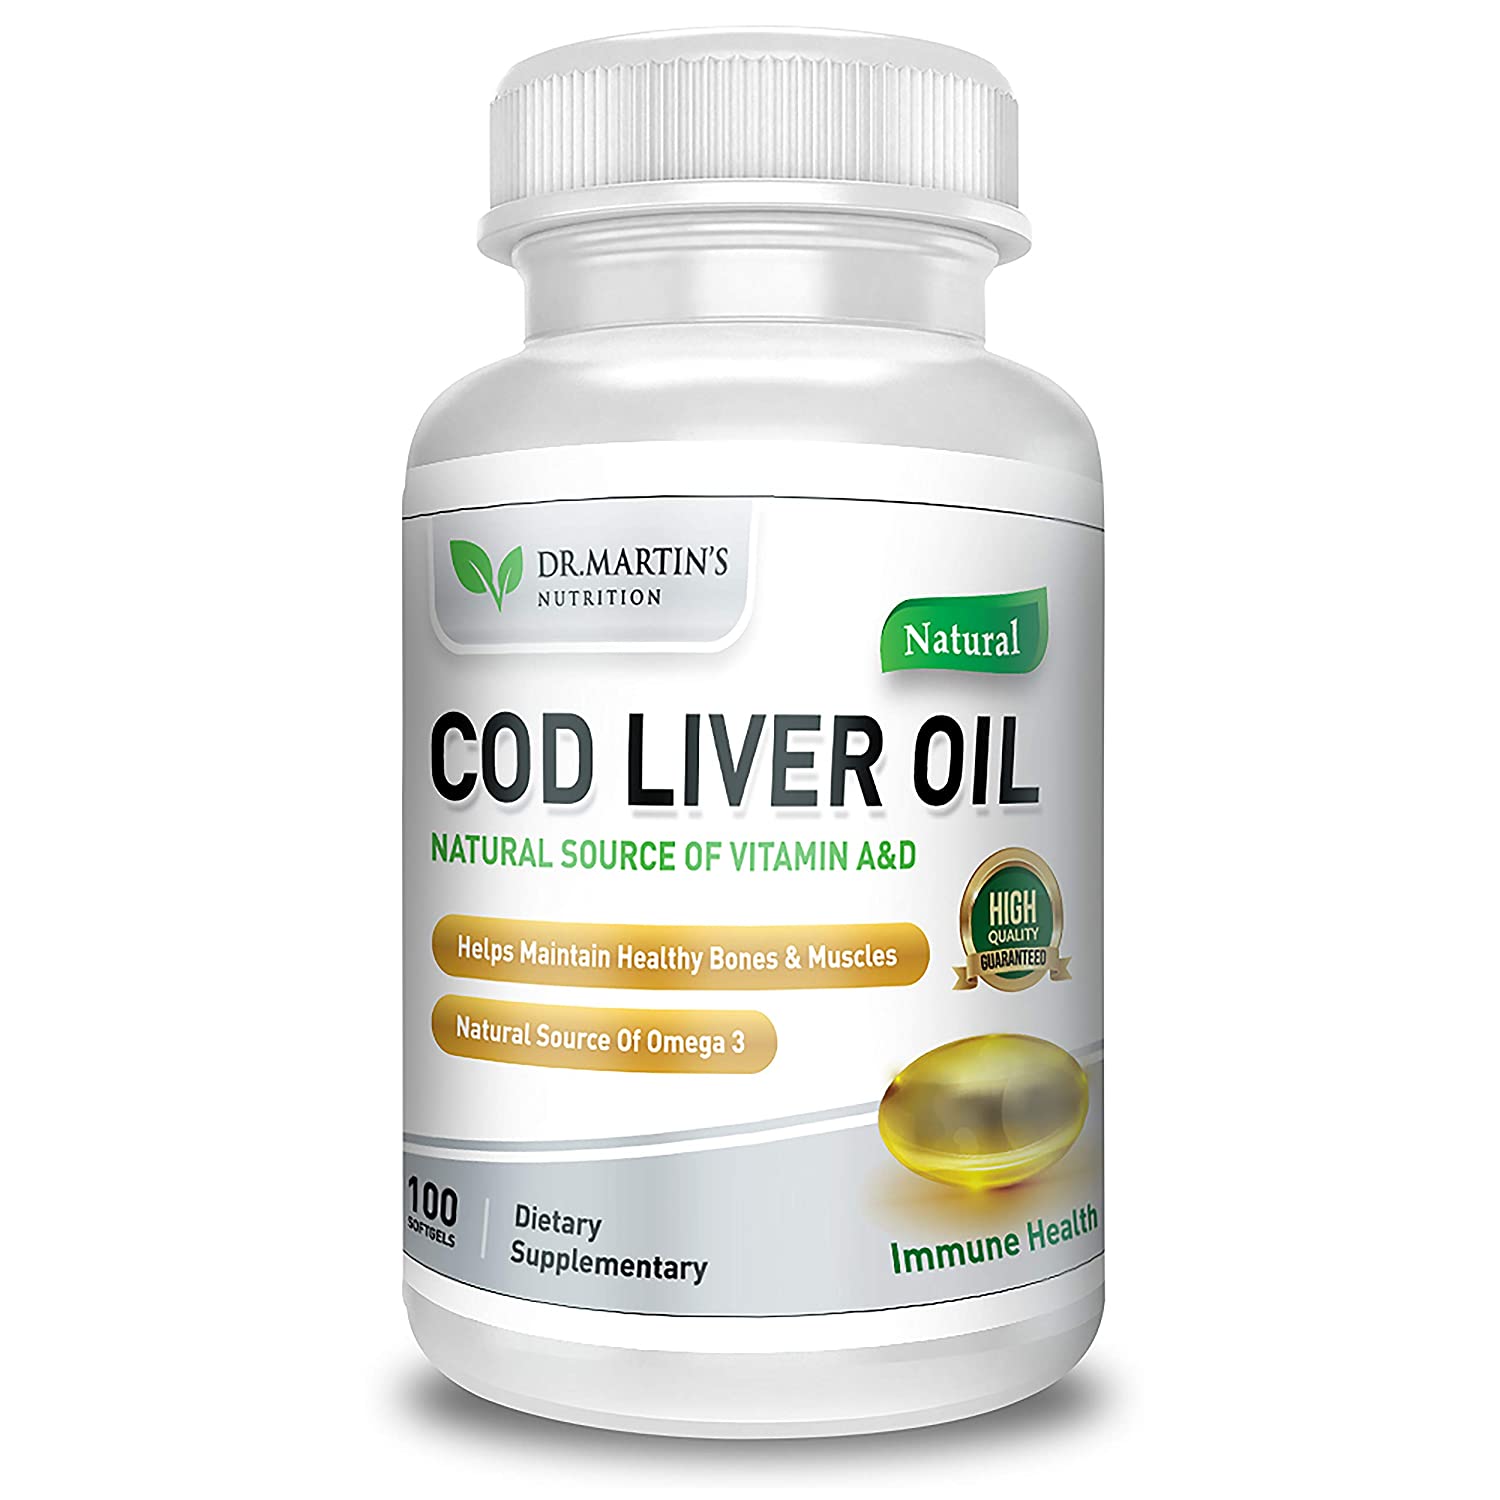 COD LIVER OIL | 100 Softgels | Natural Source Of Omega 3 Fatty Acids